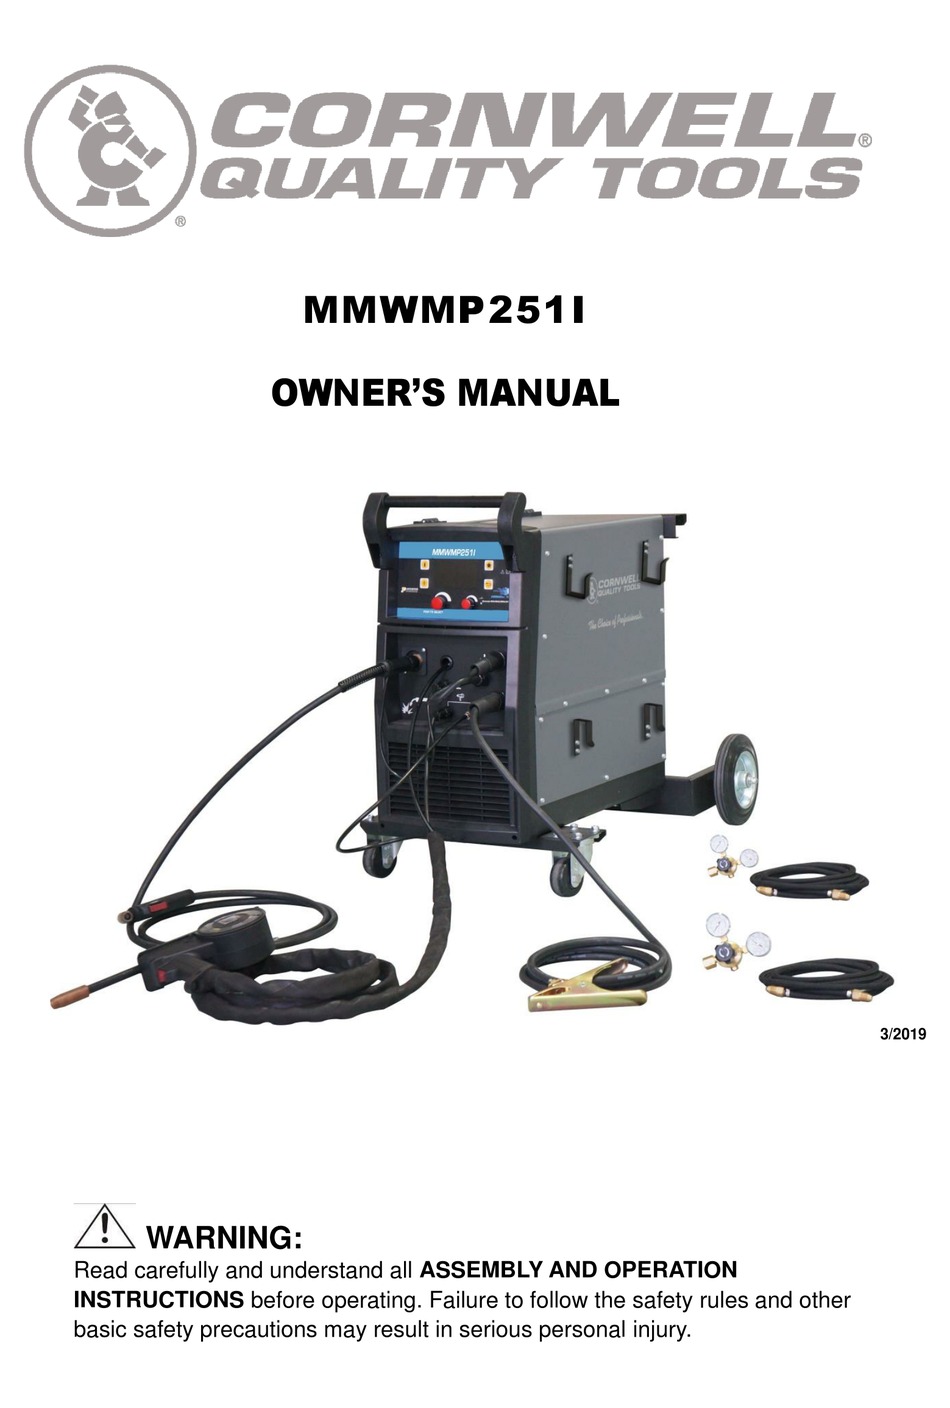 CORNWELL TOOLS MMWMGS250 OWNER'S MANUAL Pdf Download ManualsLib